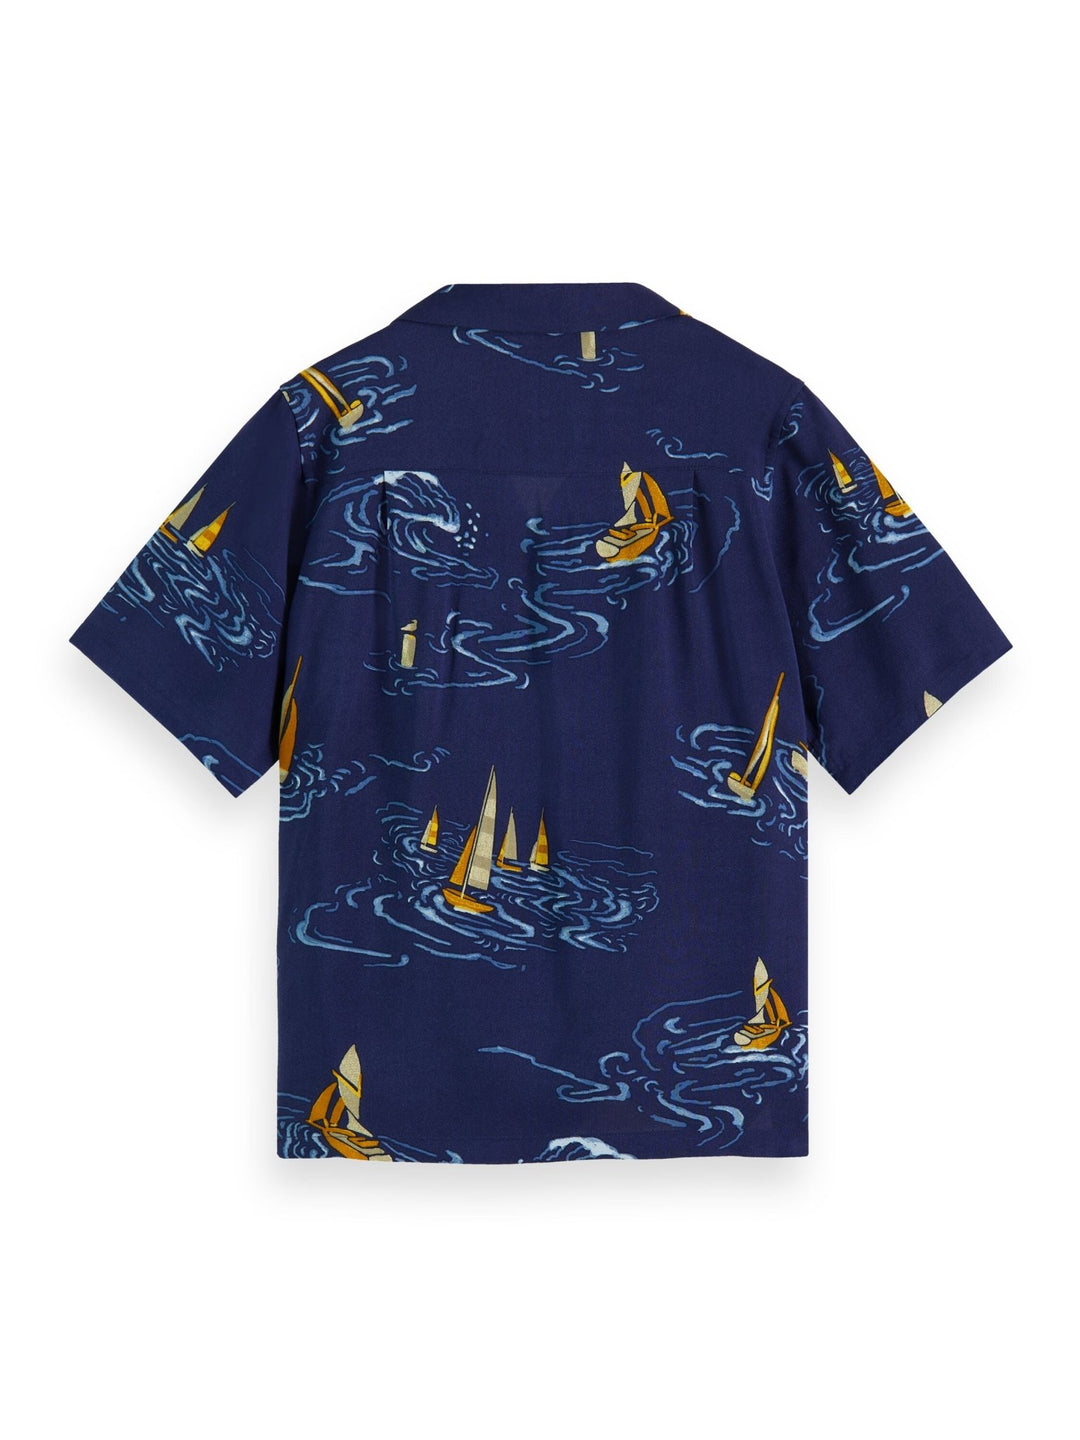 All Over Print Short Sleeve Shirt - Sailboats - Posh New York